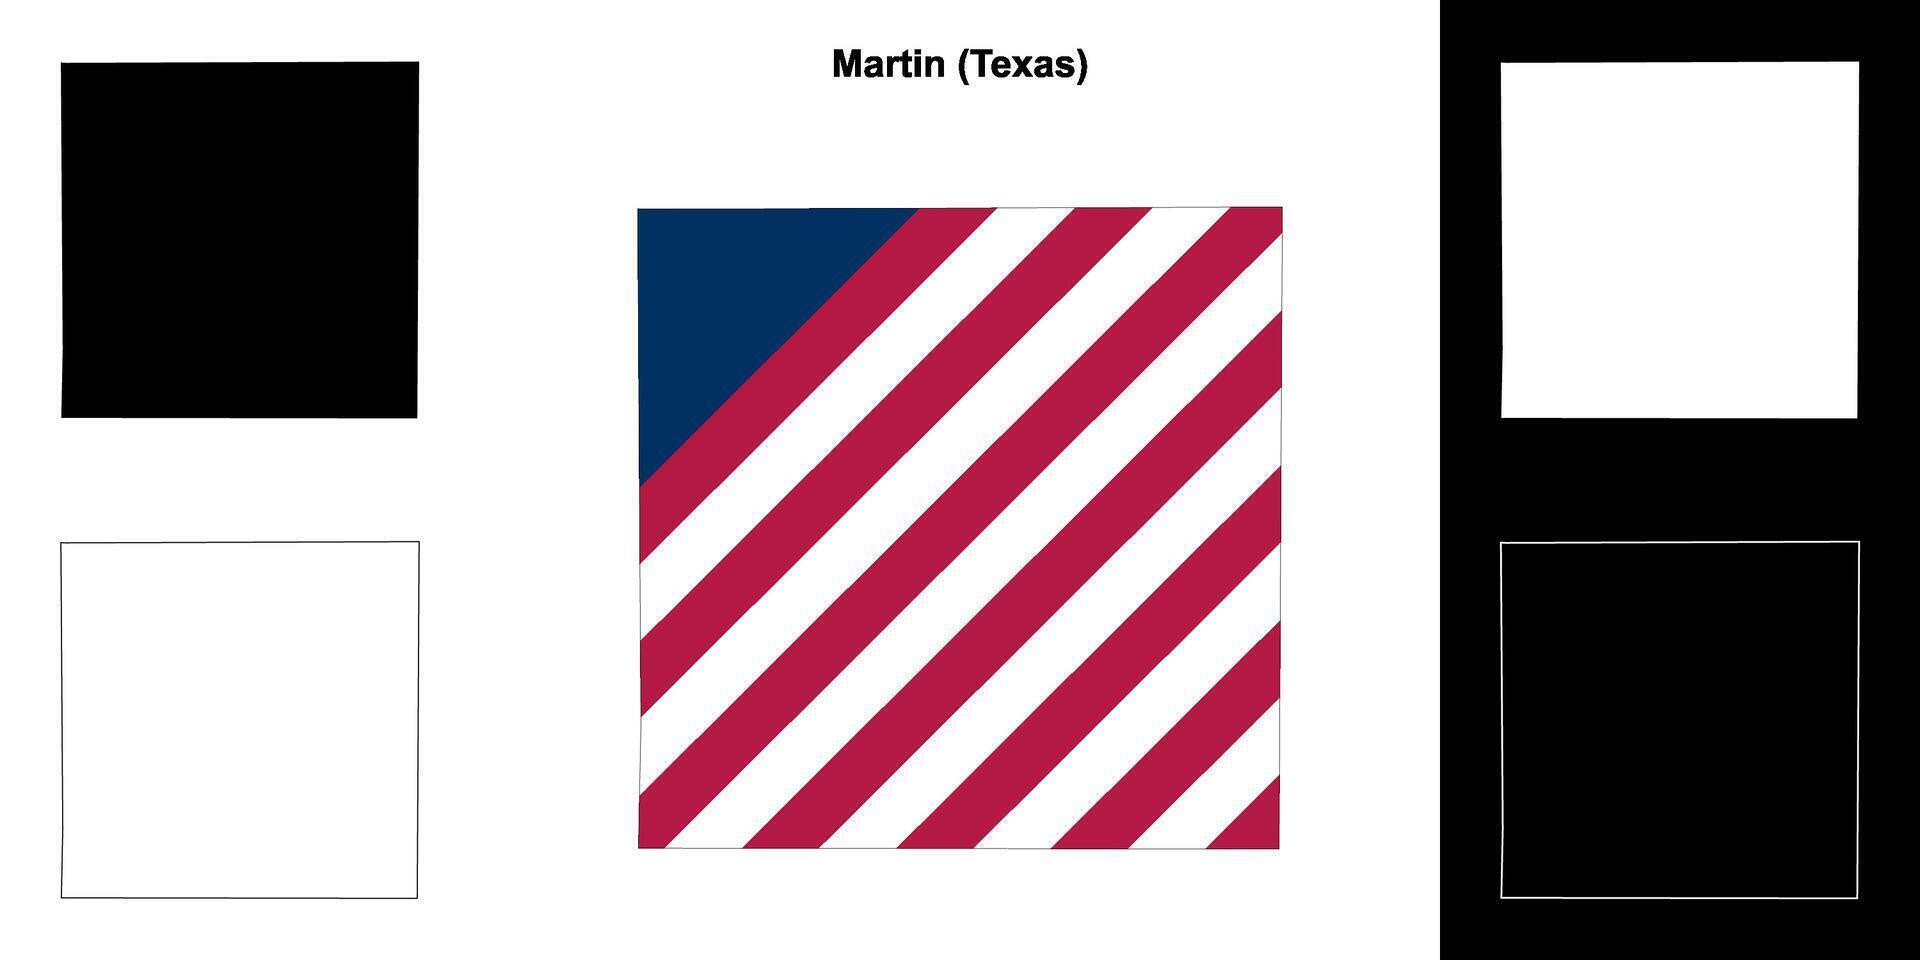 Martin condado, texas esboço mapa conjunto vetor